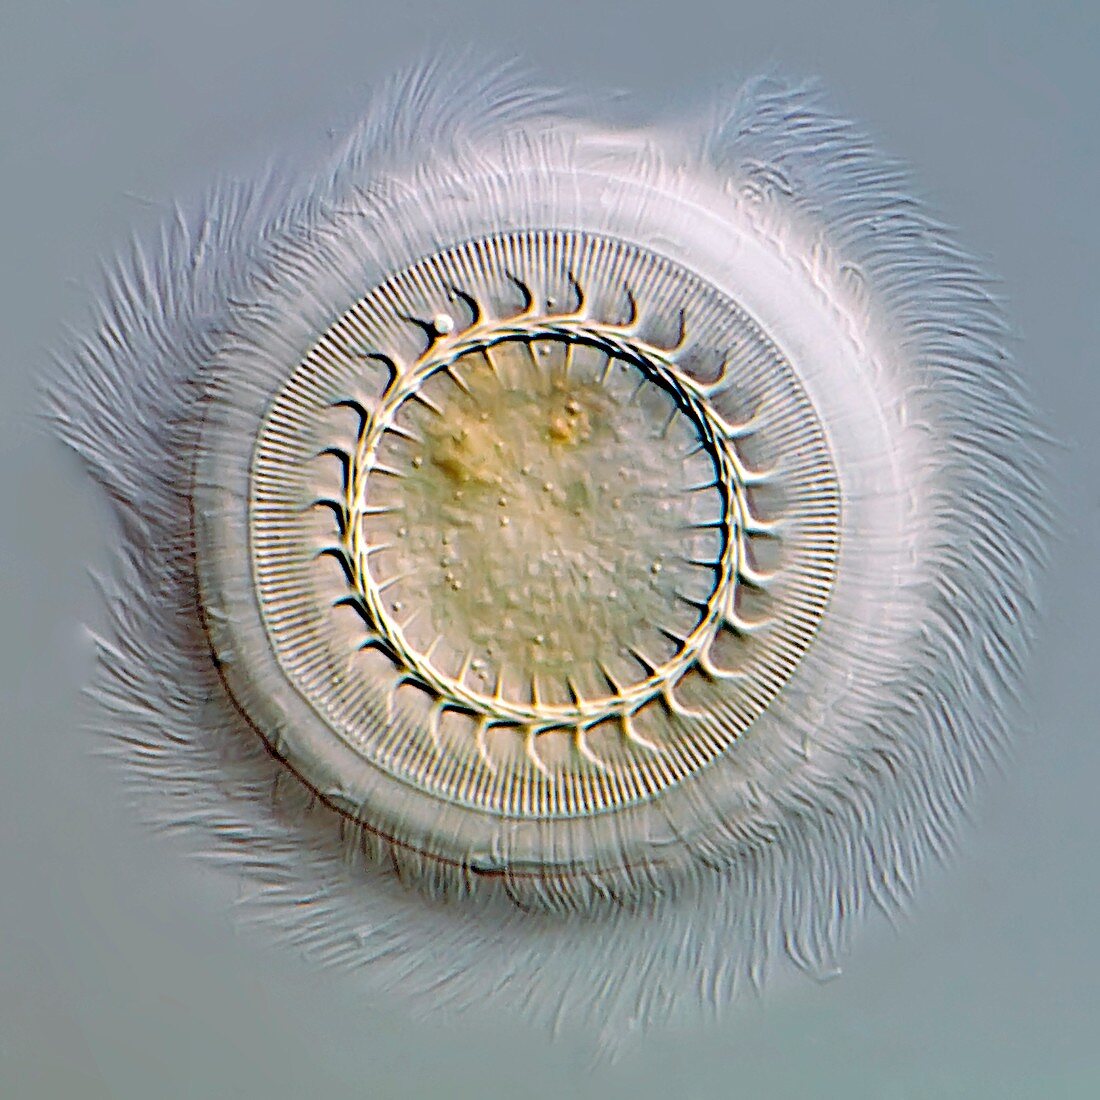 Trichodina parasite,light micrograph